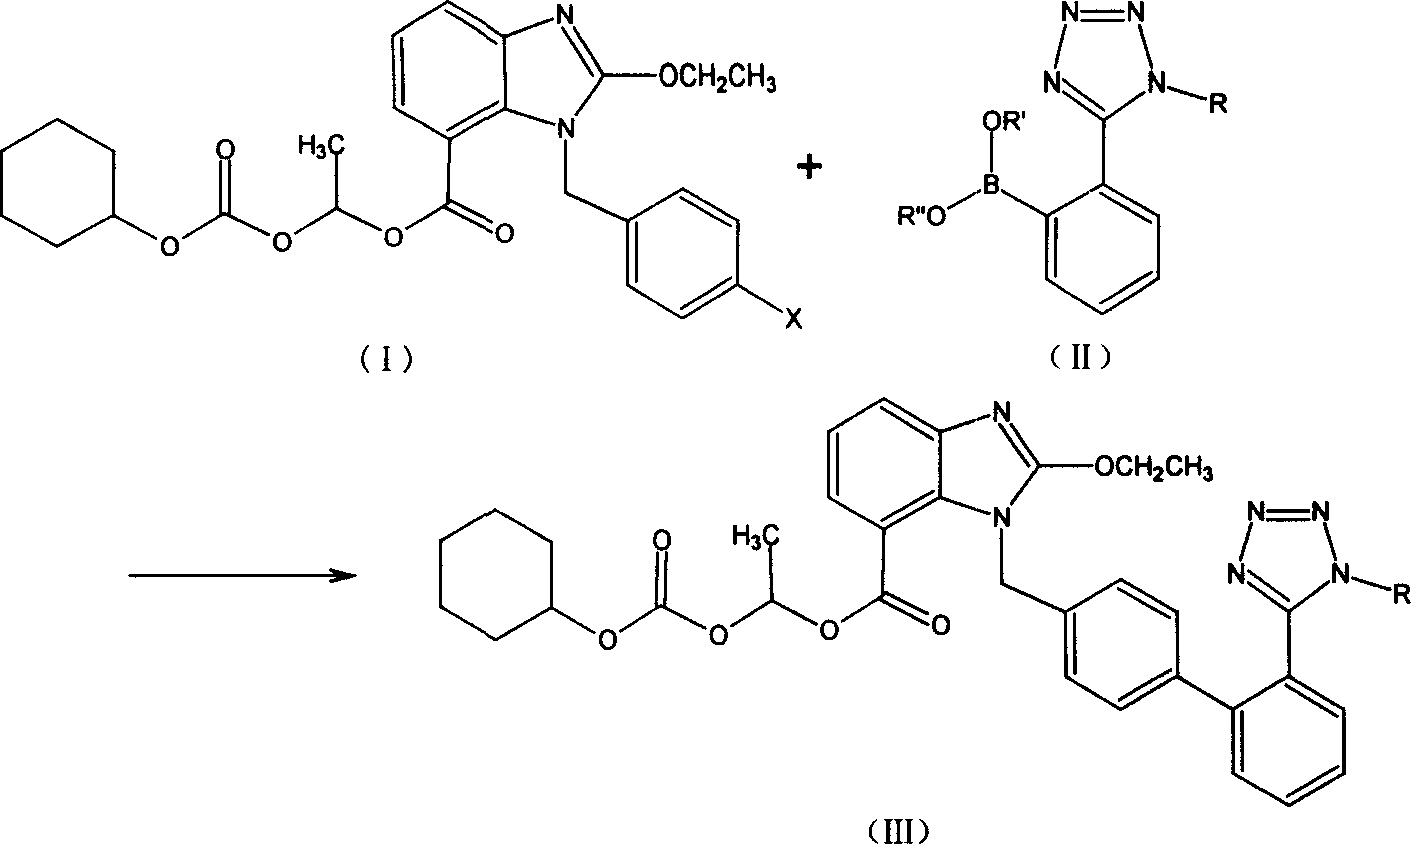 Candesartan Cilexetil and its precursor compound preparation method